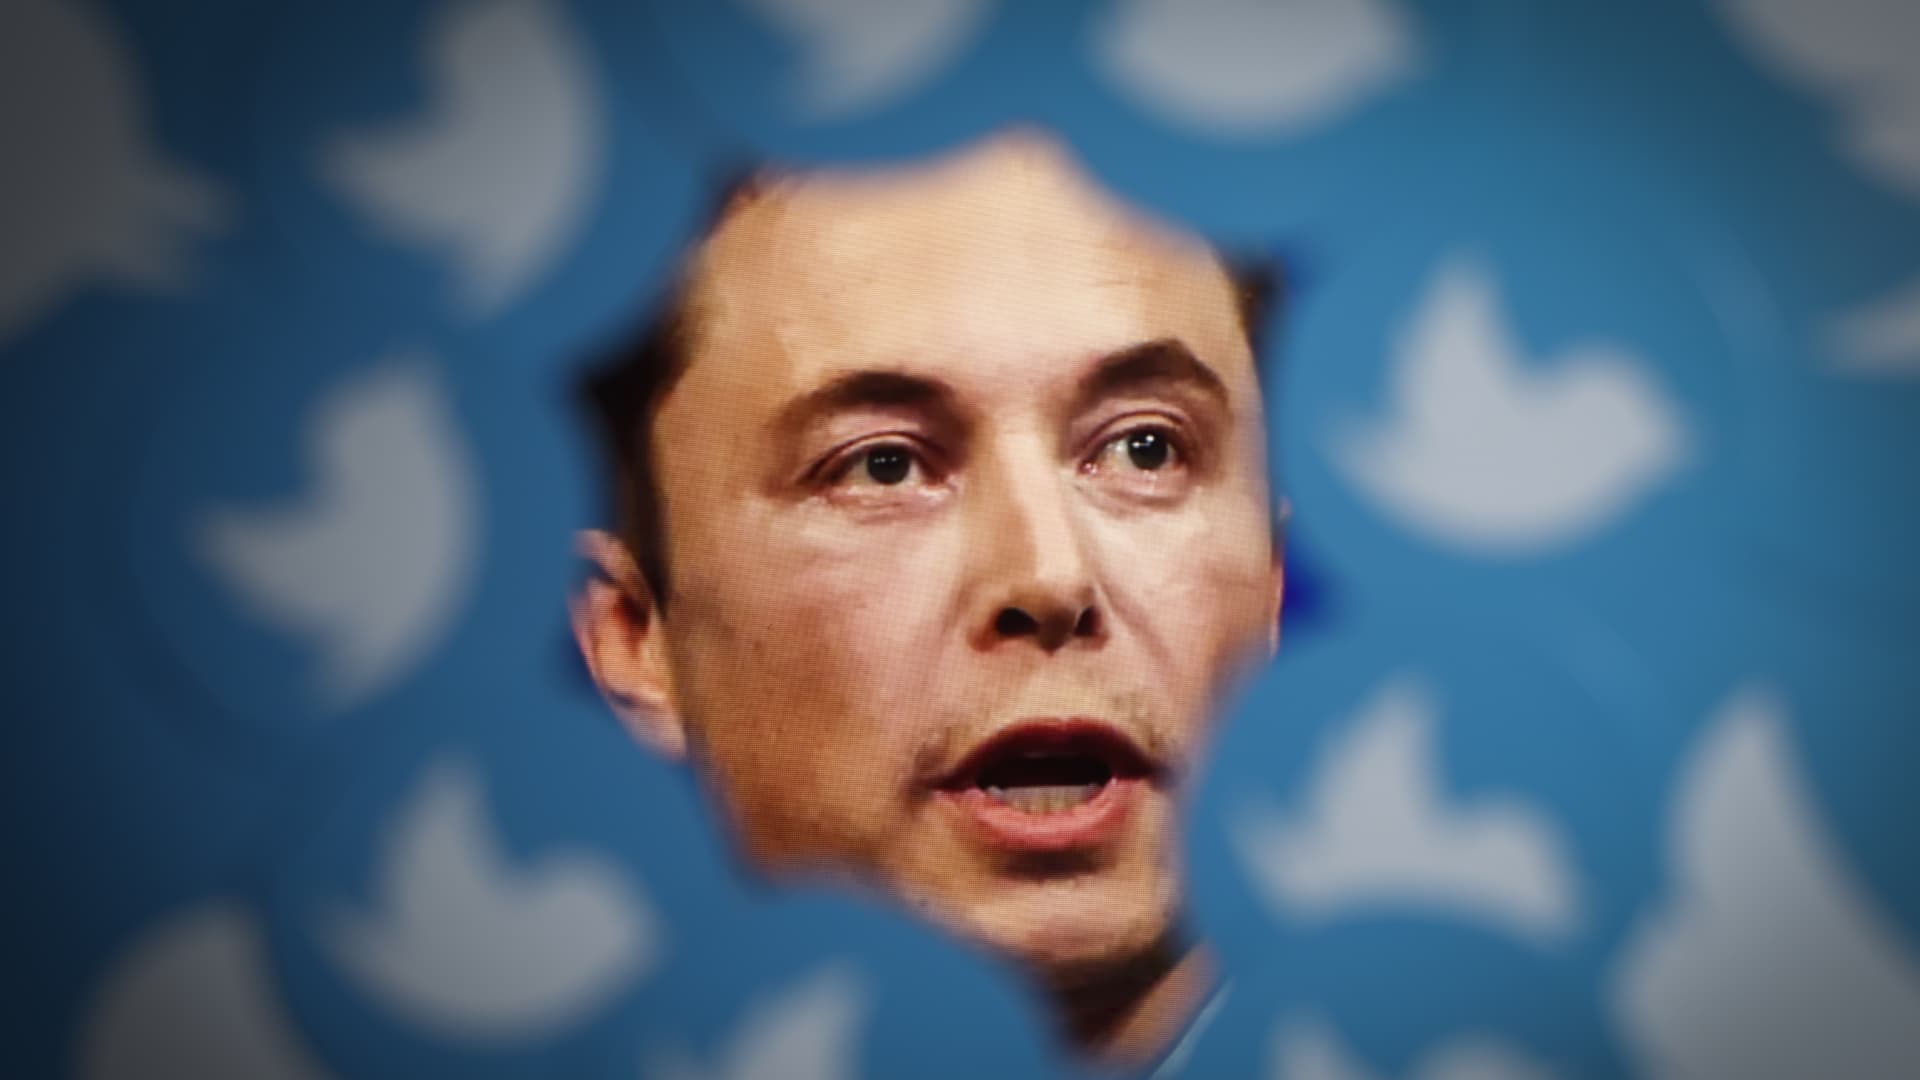 UK man pleads guilty to Twitter hack that compromised accounts of Joe Biden, Elon Musk